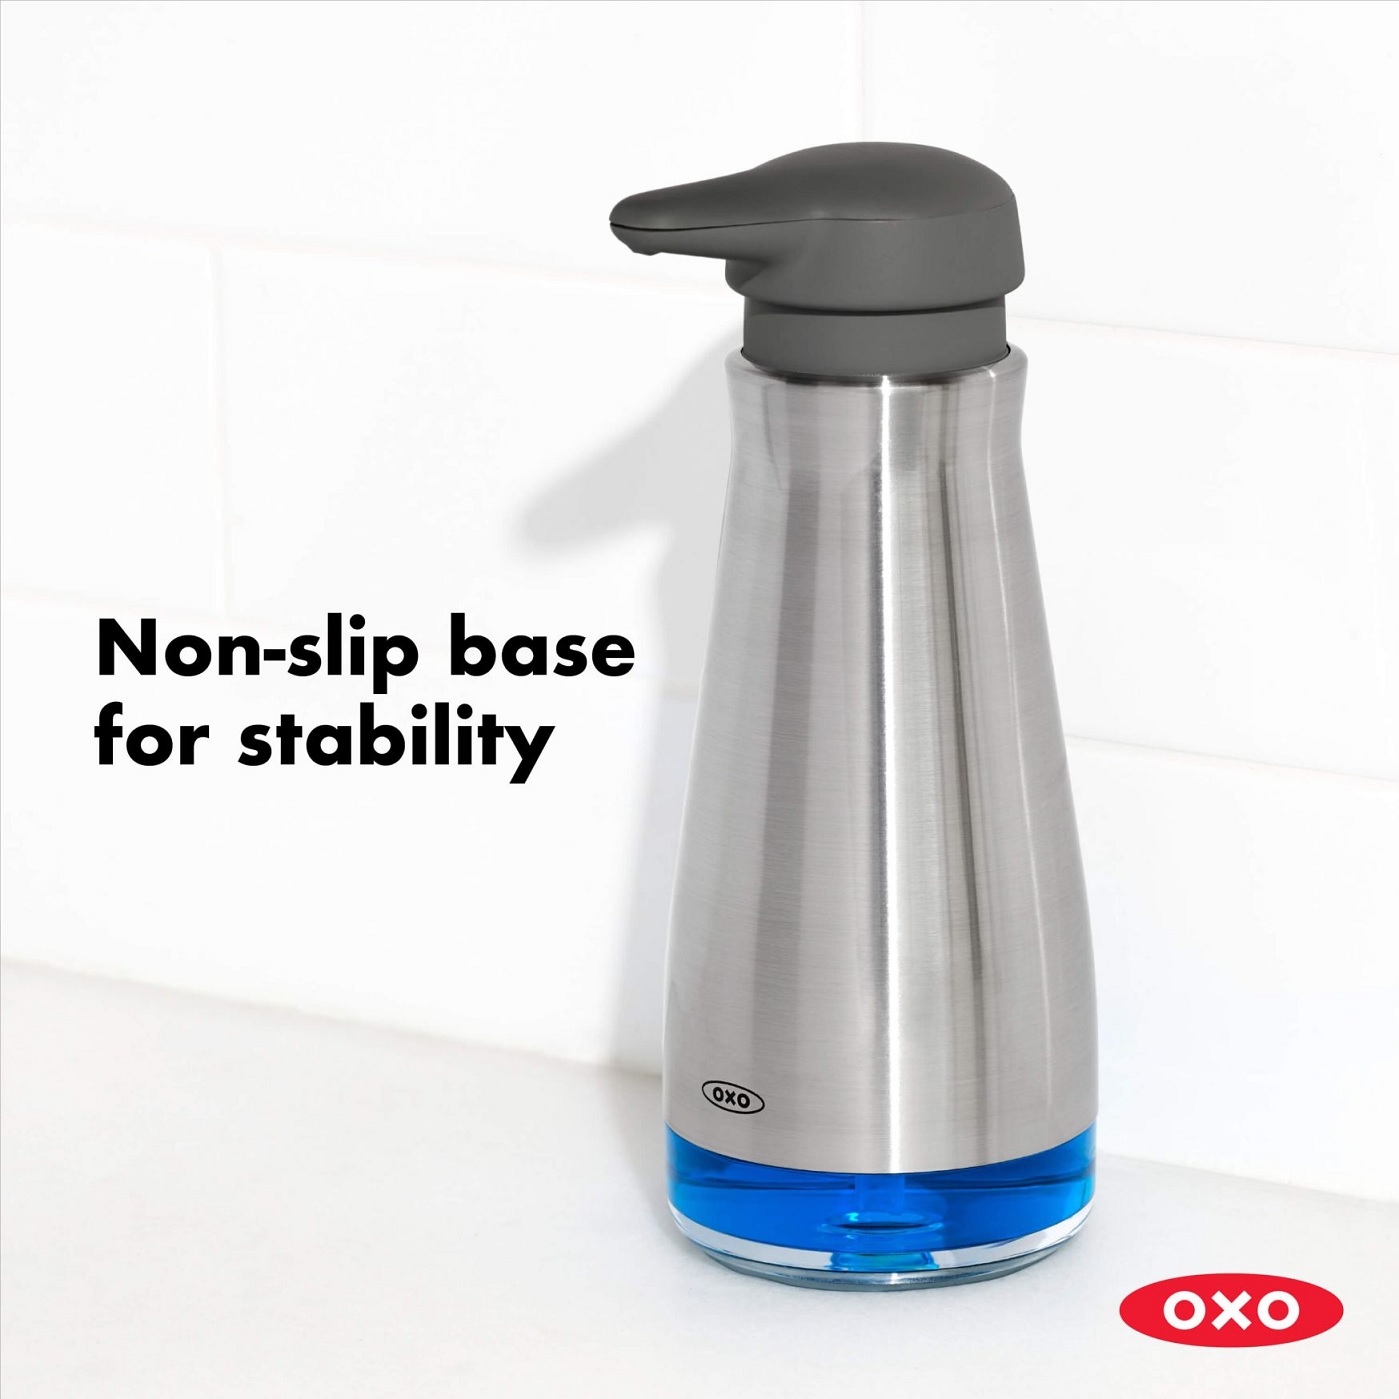 OXO Good Grips Soap Dispenser - Charcoal